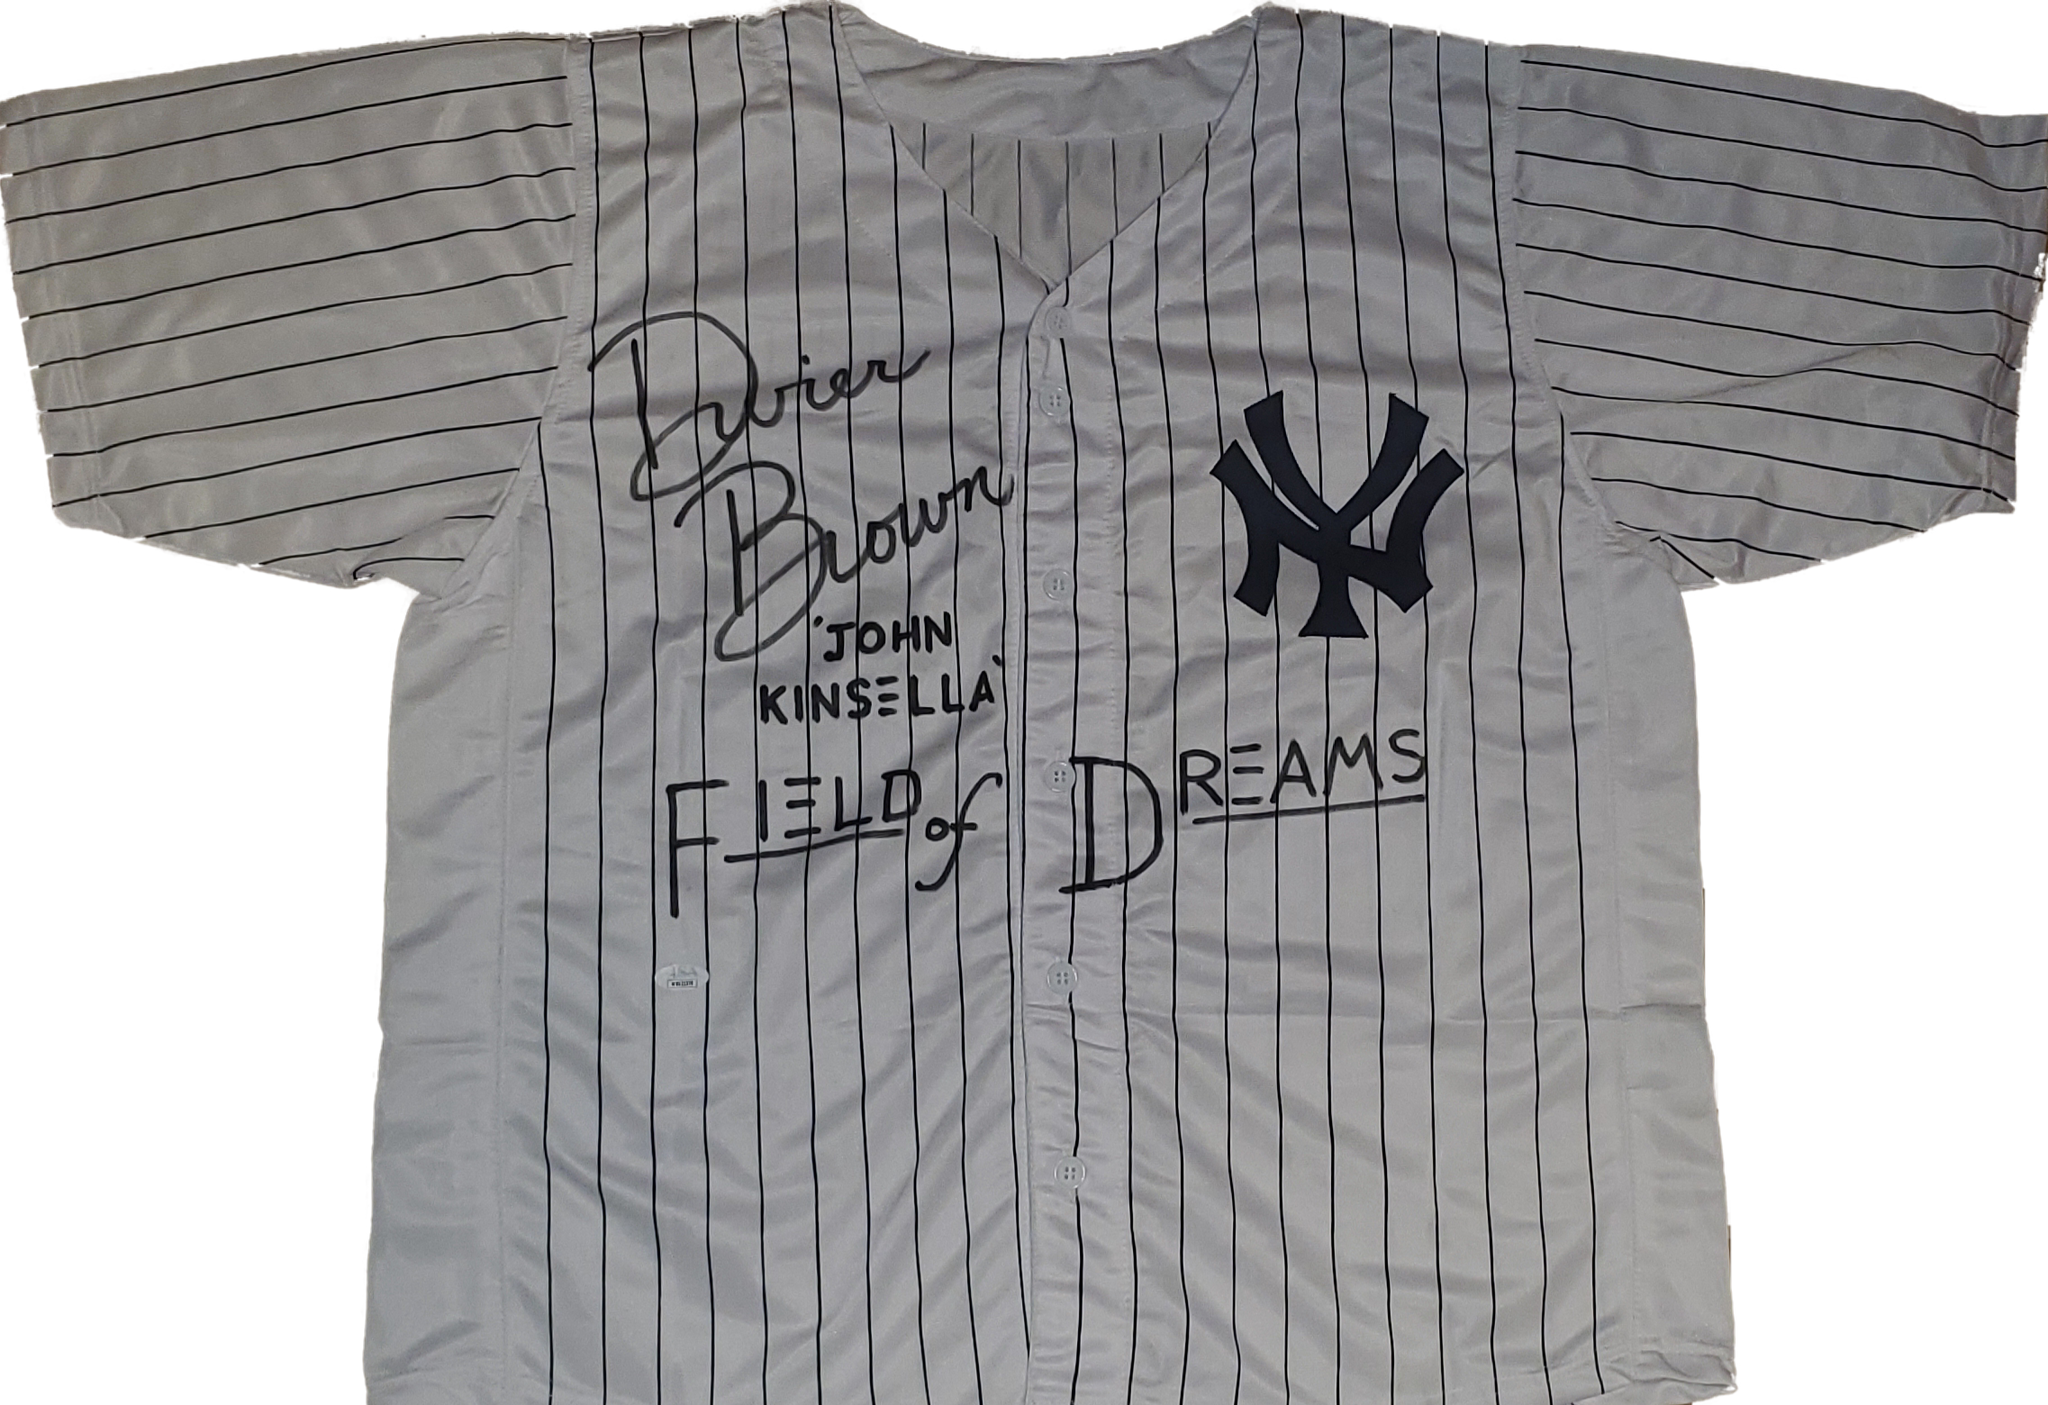 Dwier Brown Autographed Custom Yankees Jersey with Inscription (JSA)